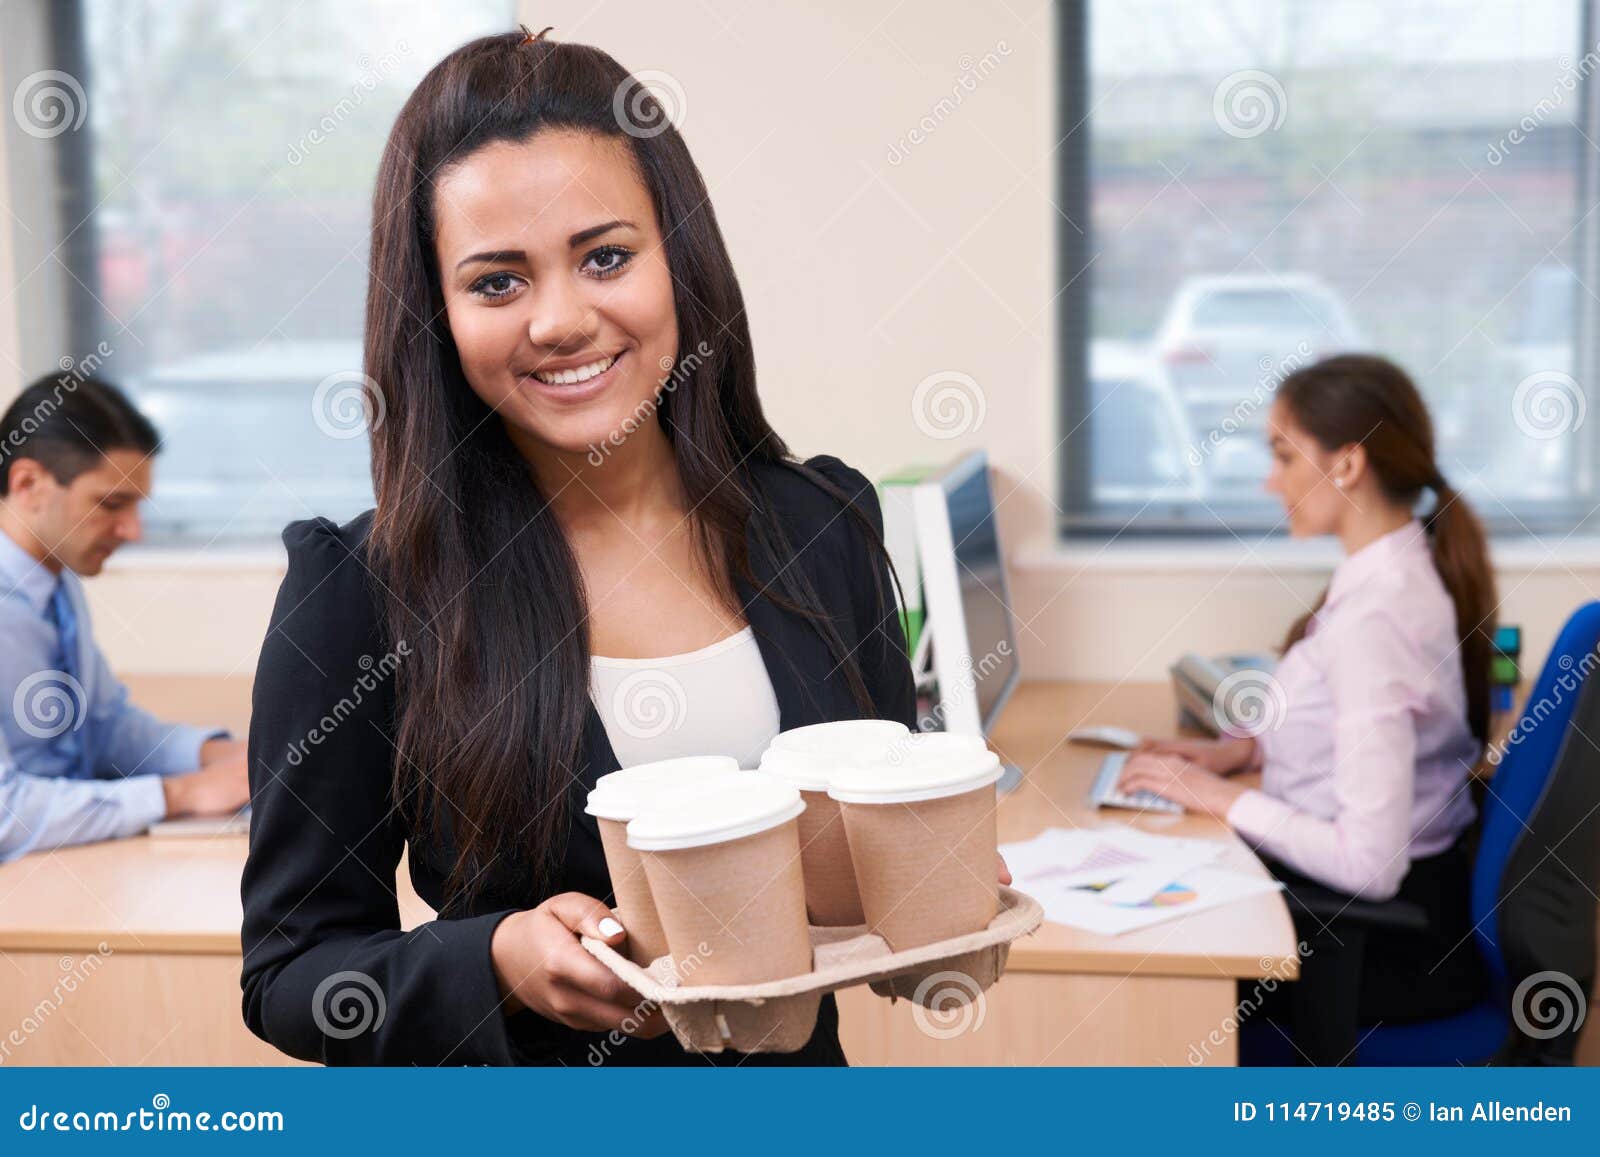 female intern fetching coffee in office